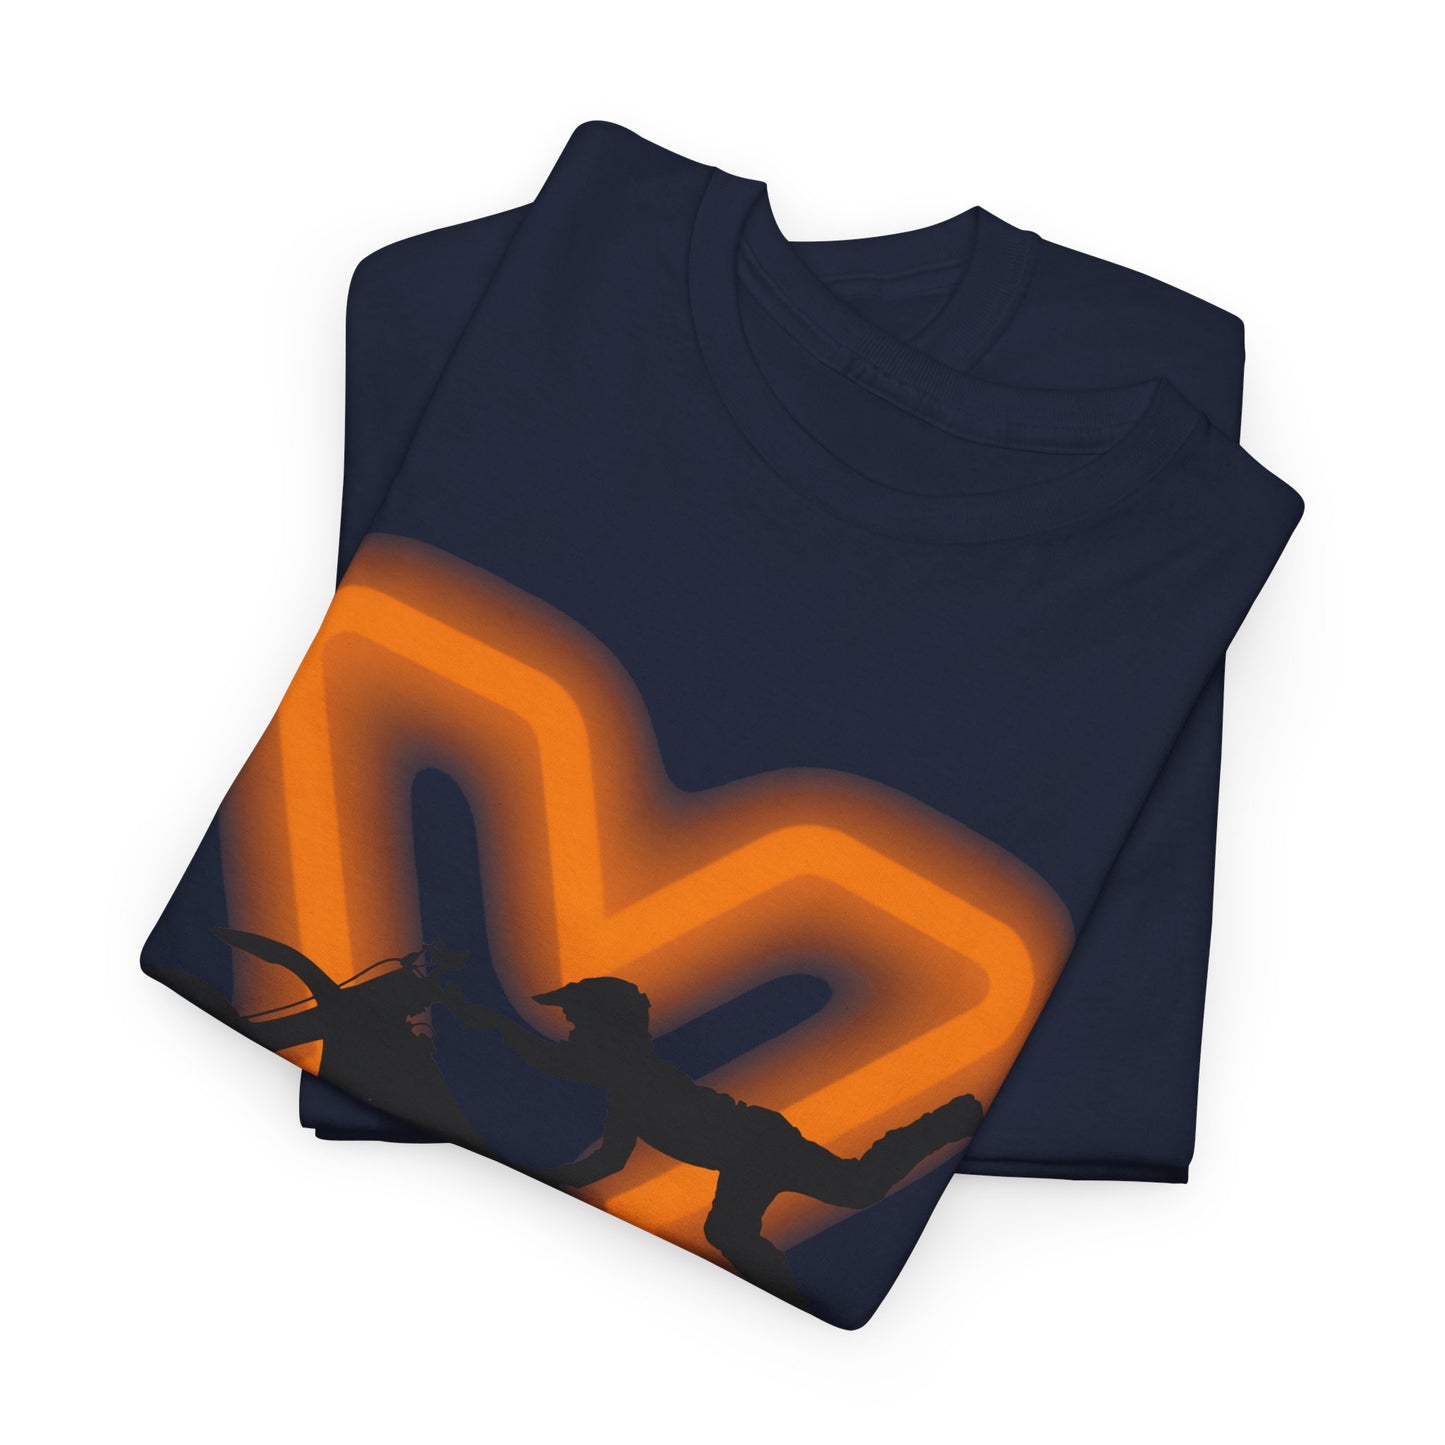 X Supercross T-Shirt, X Supercross Tee 100% Cotton, 4 Colours, AUS - USA warehouse, free post.